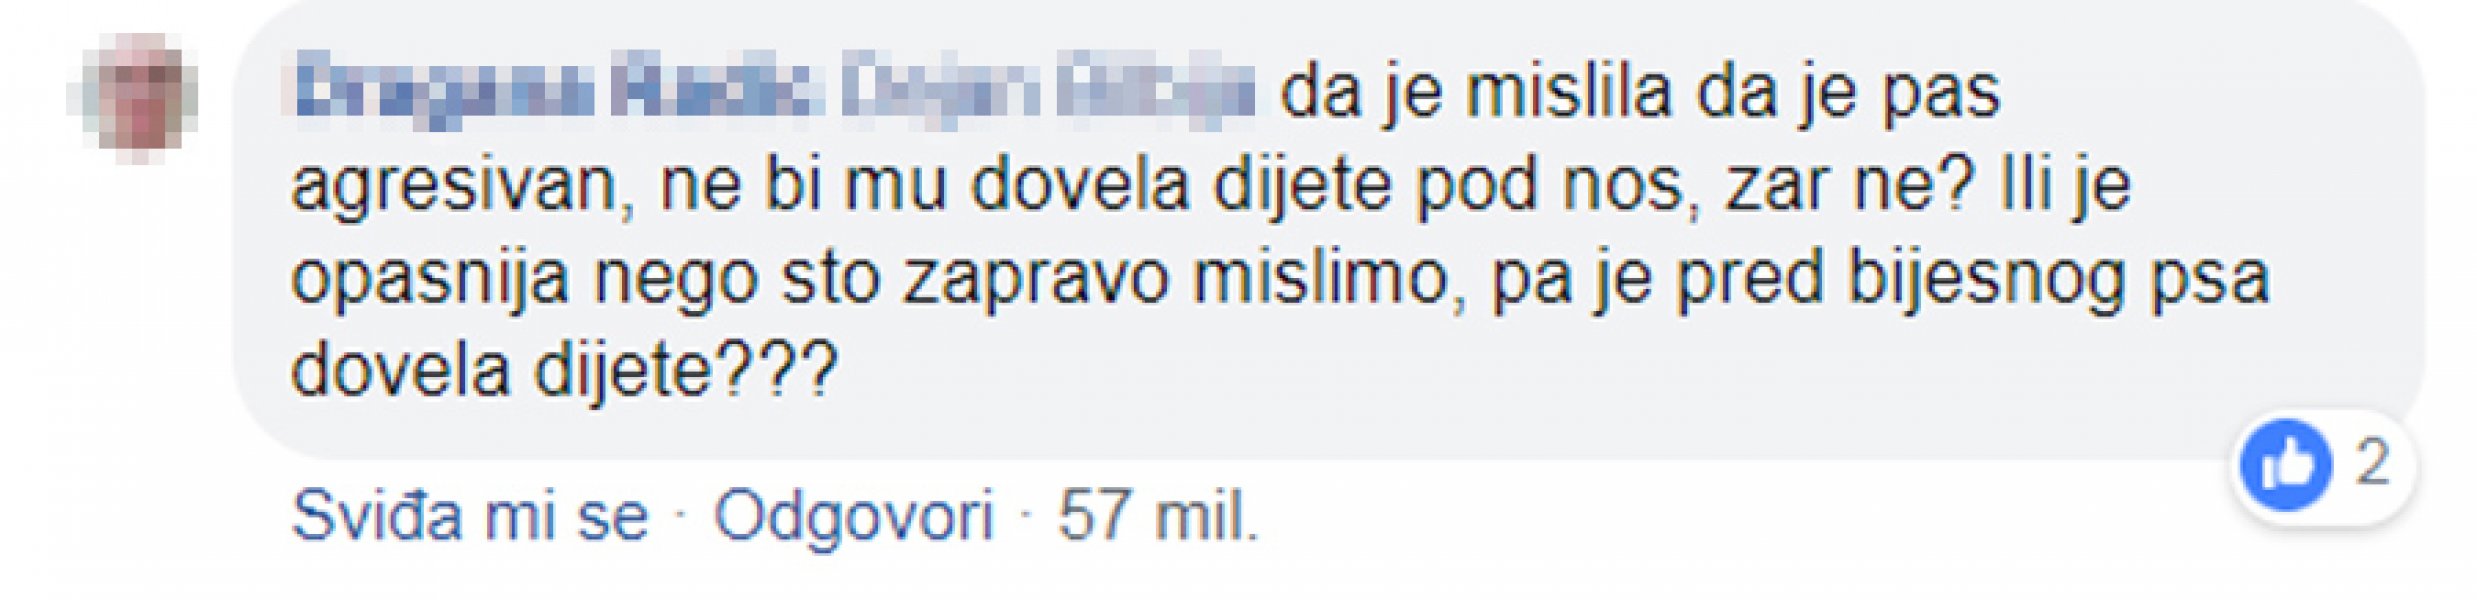 ana-kozarska-dubica-komentari3-foto-screenshot-facebook